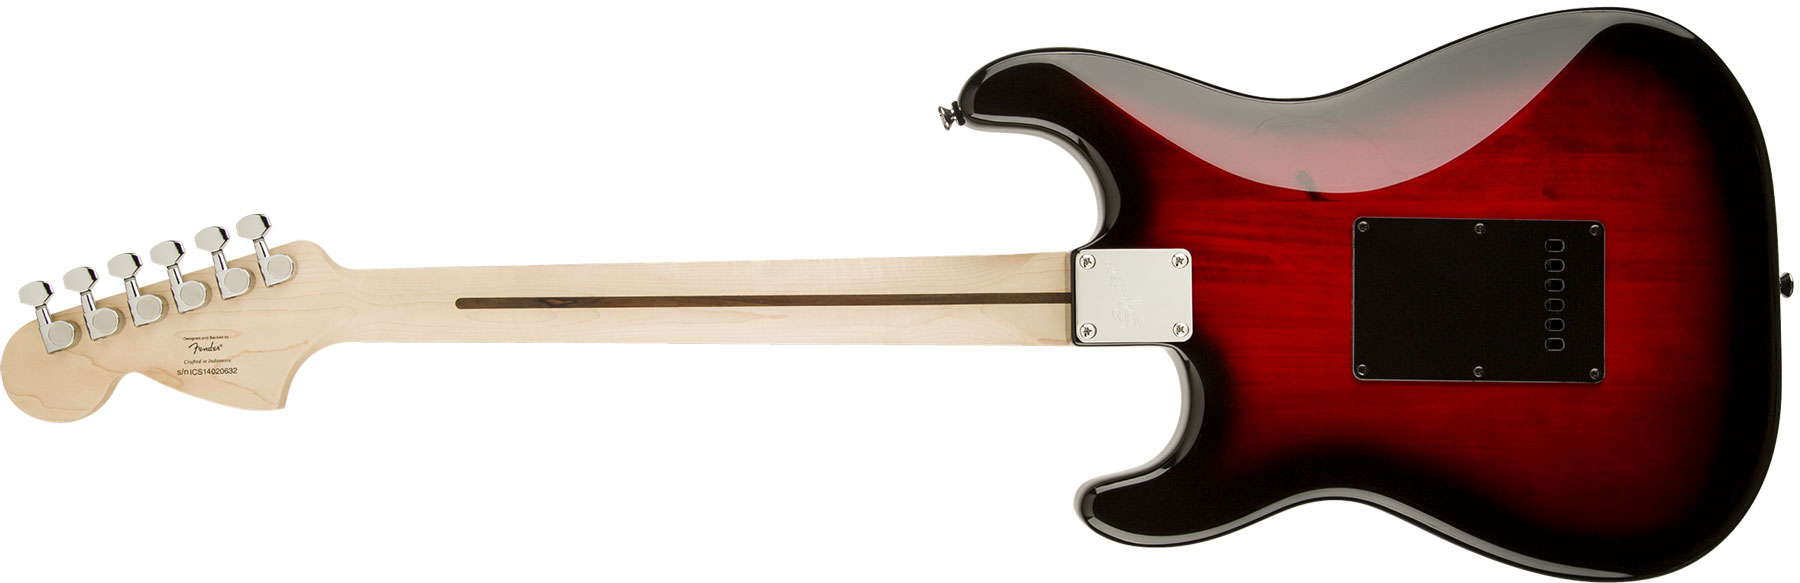 Squier Strat Standard Rw - Antique Burst - Str shape electric guitar - Variation 1